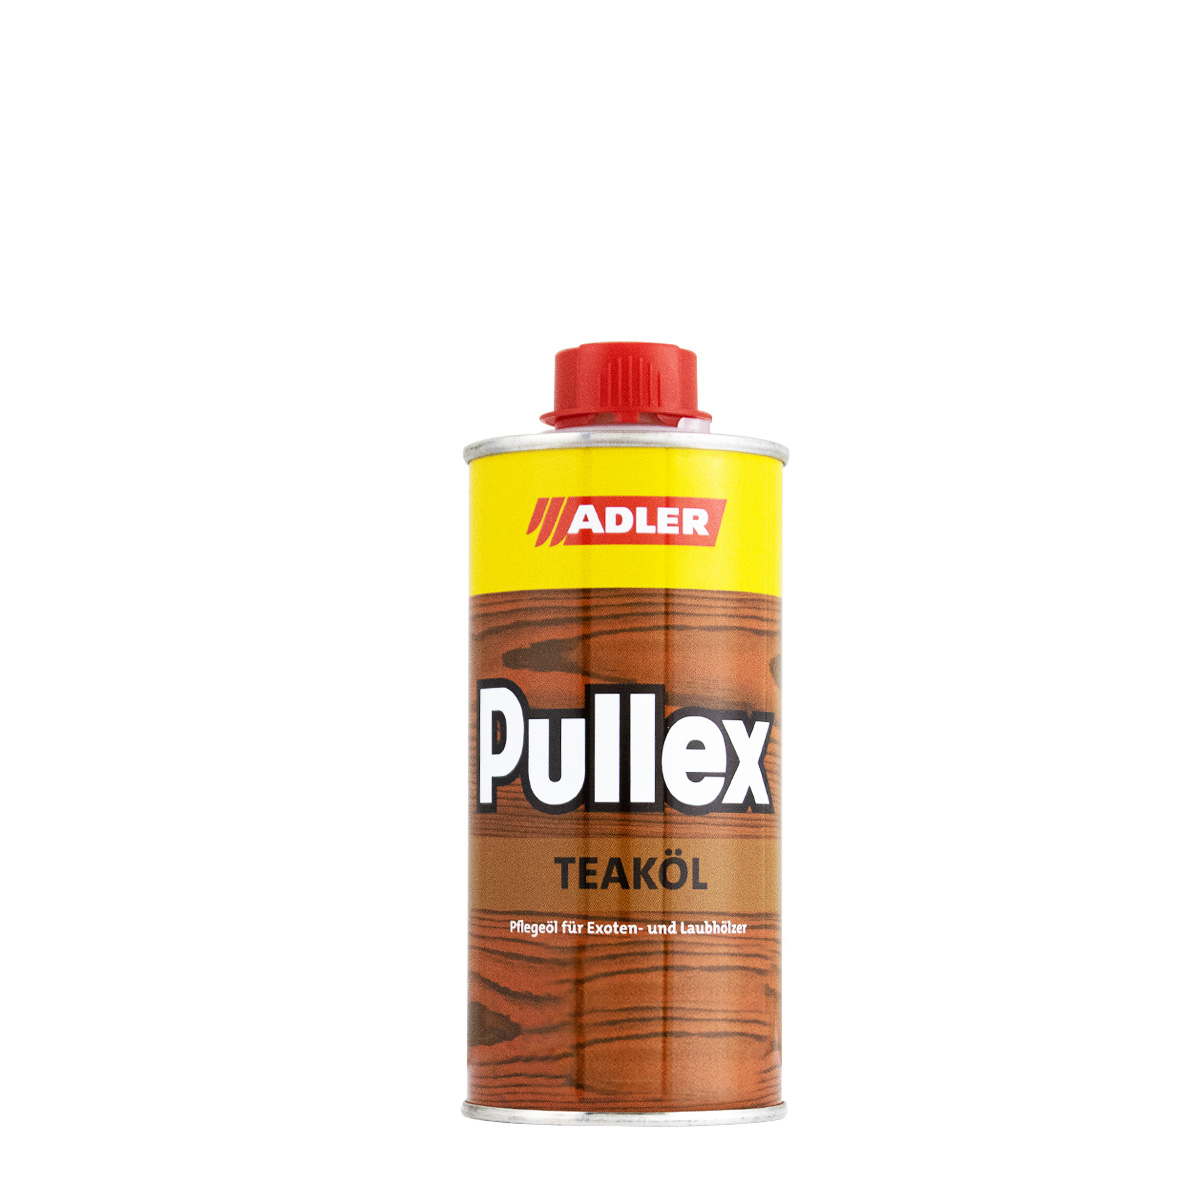 Adler Pullex Teaköl 0,25L farblos, Möbelöl, Holzöl